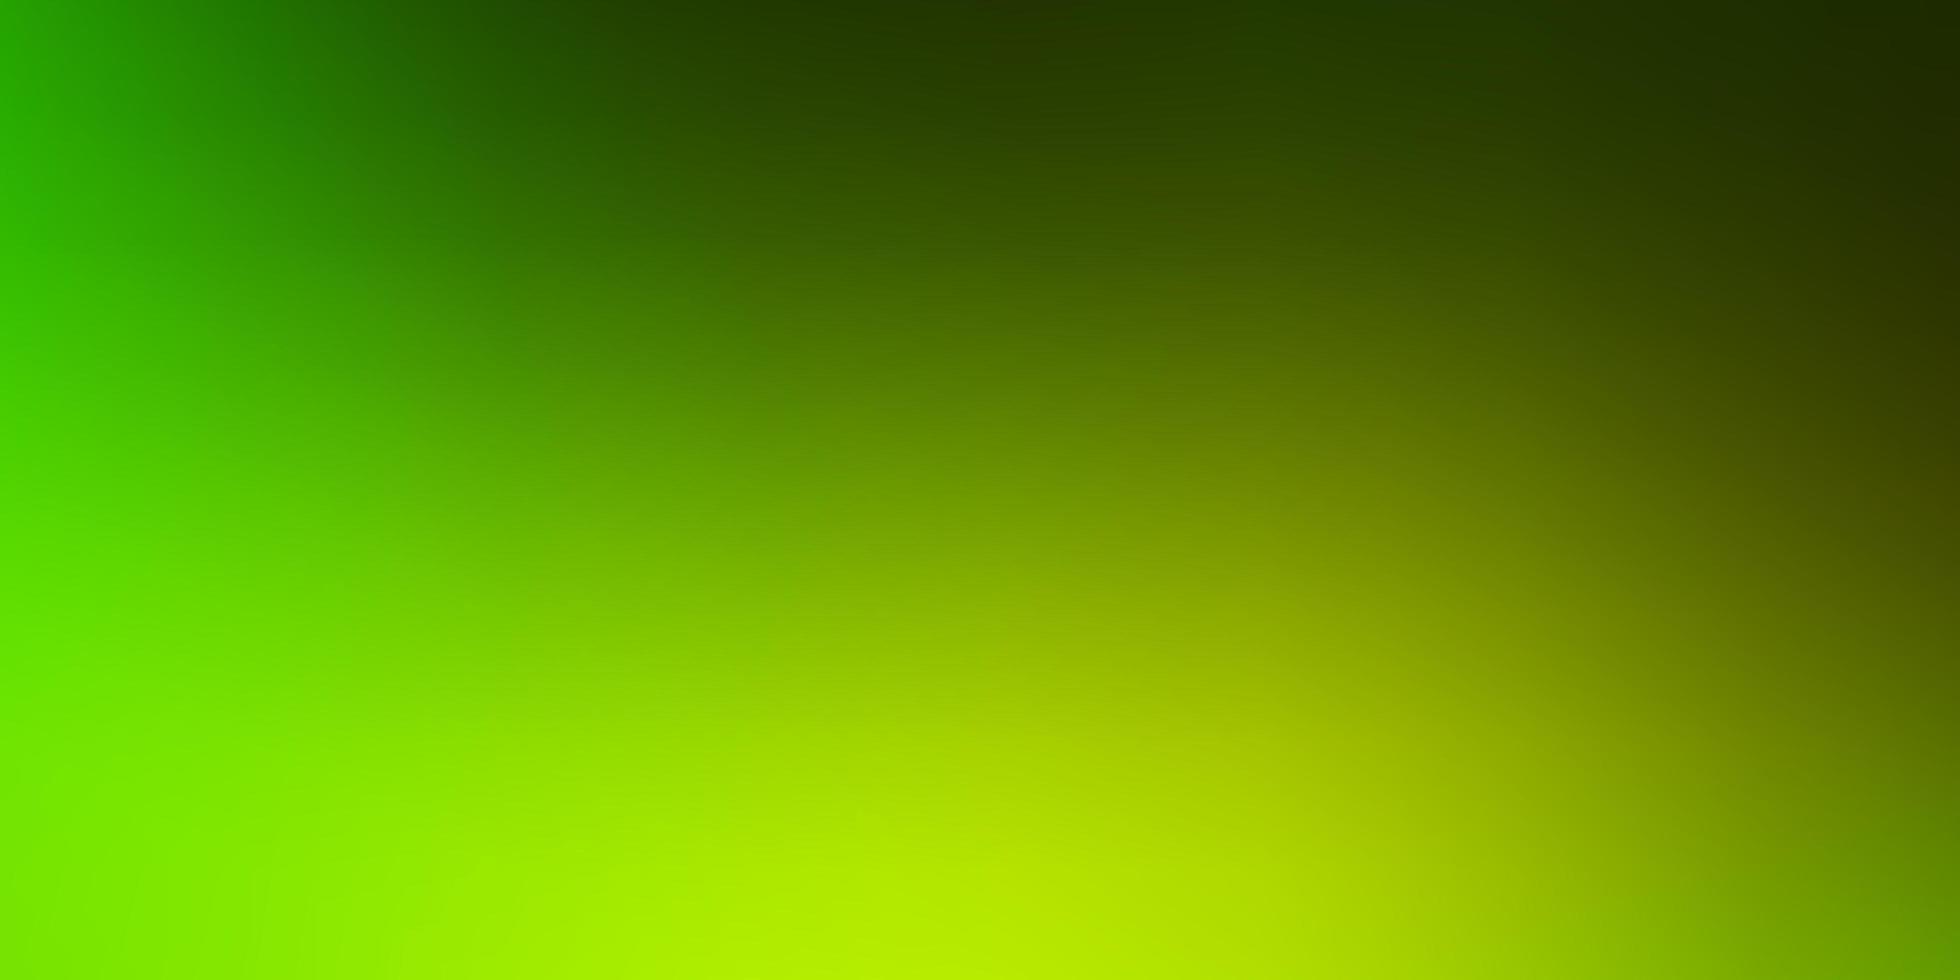 ljusgrön, gul vektor smart suddig mall.